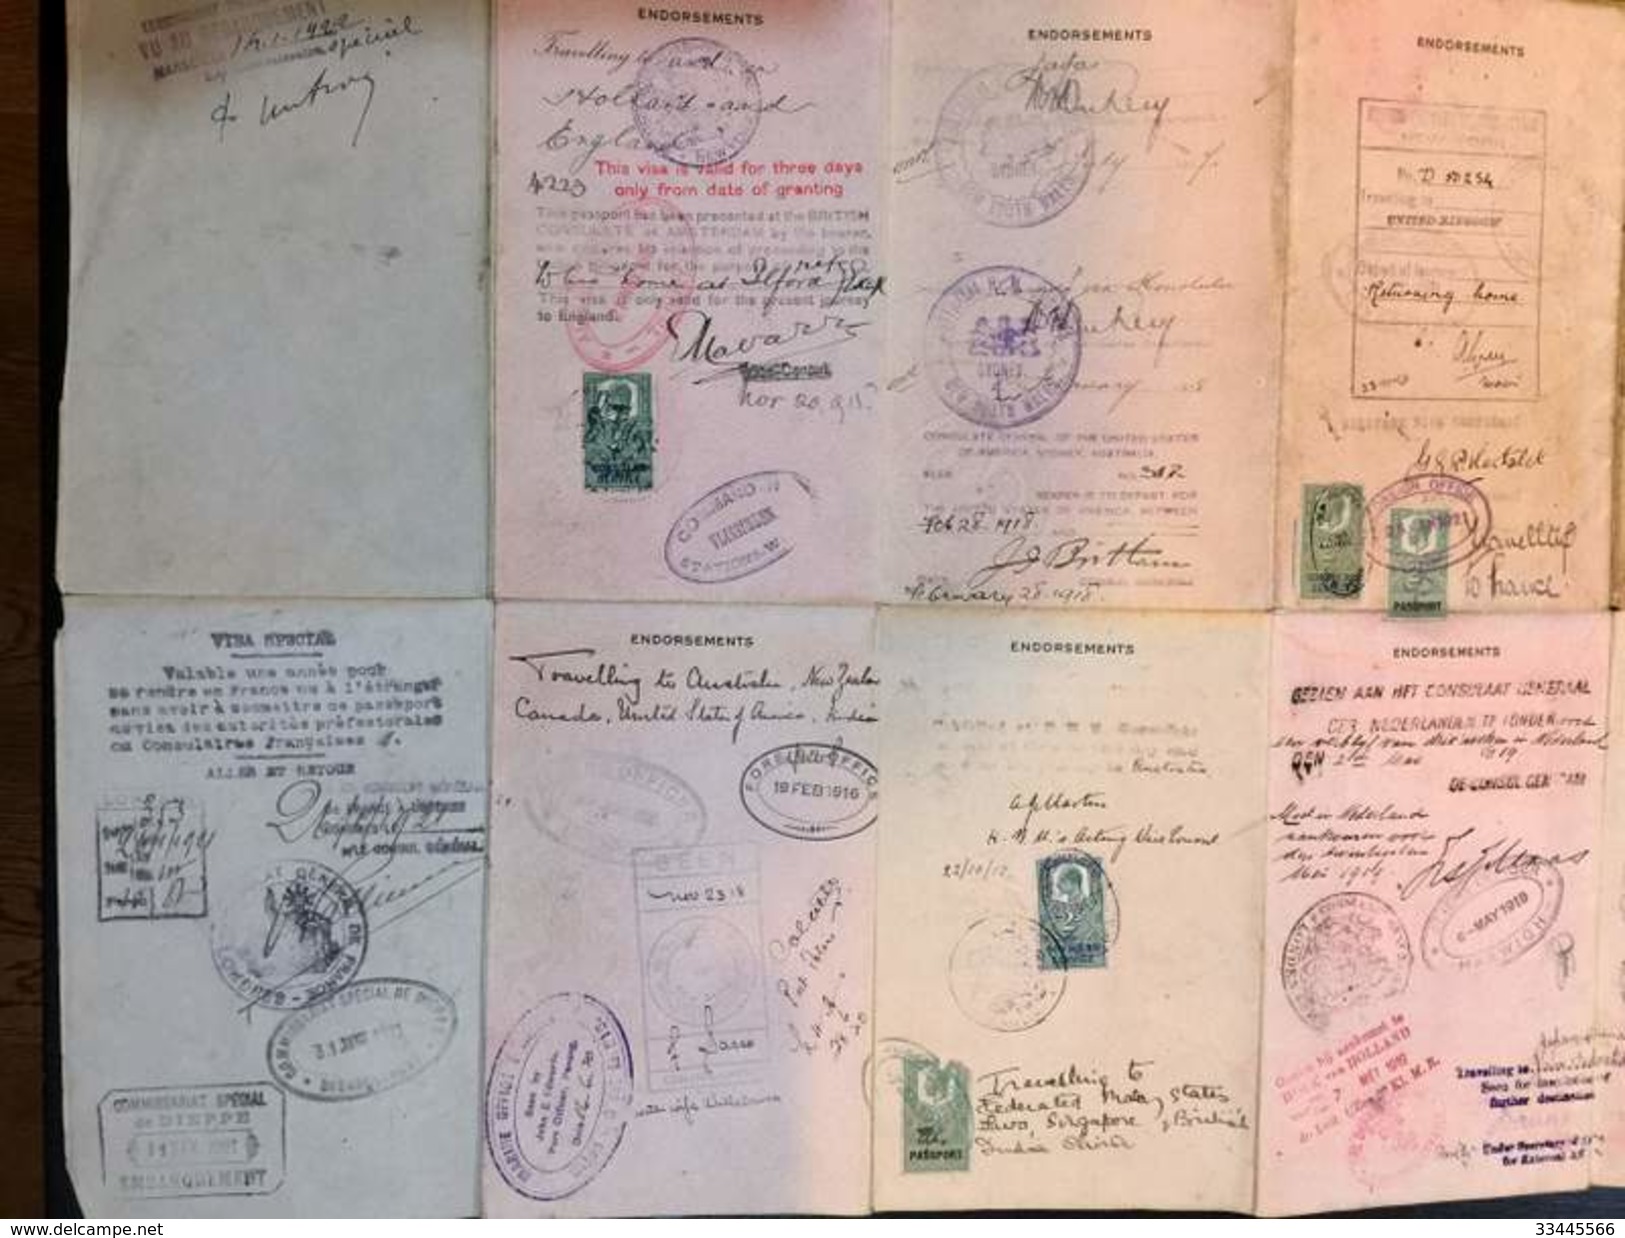 UK Passport Passeport Reisepass 1915 issued in New York plenty of visas - take a look!